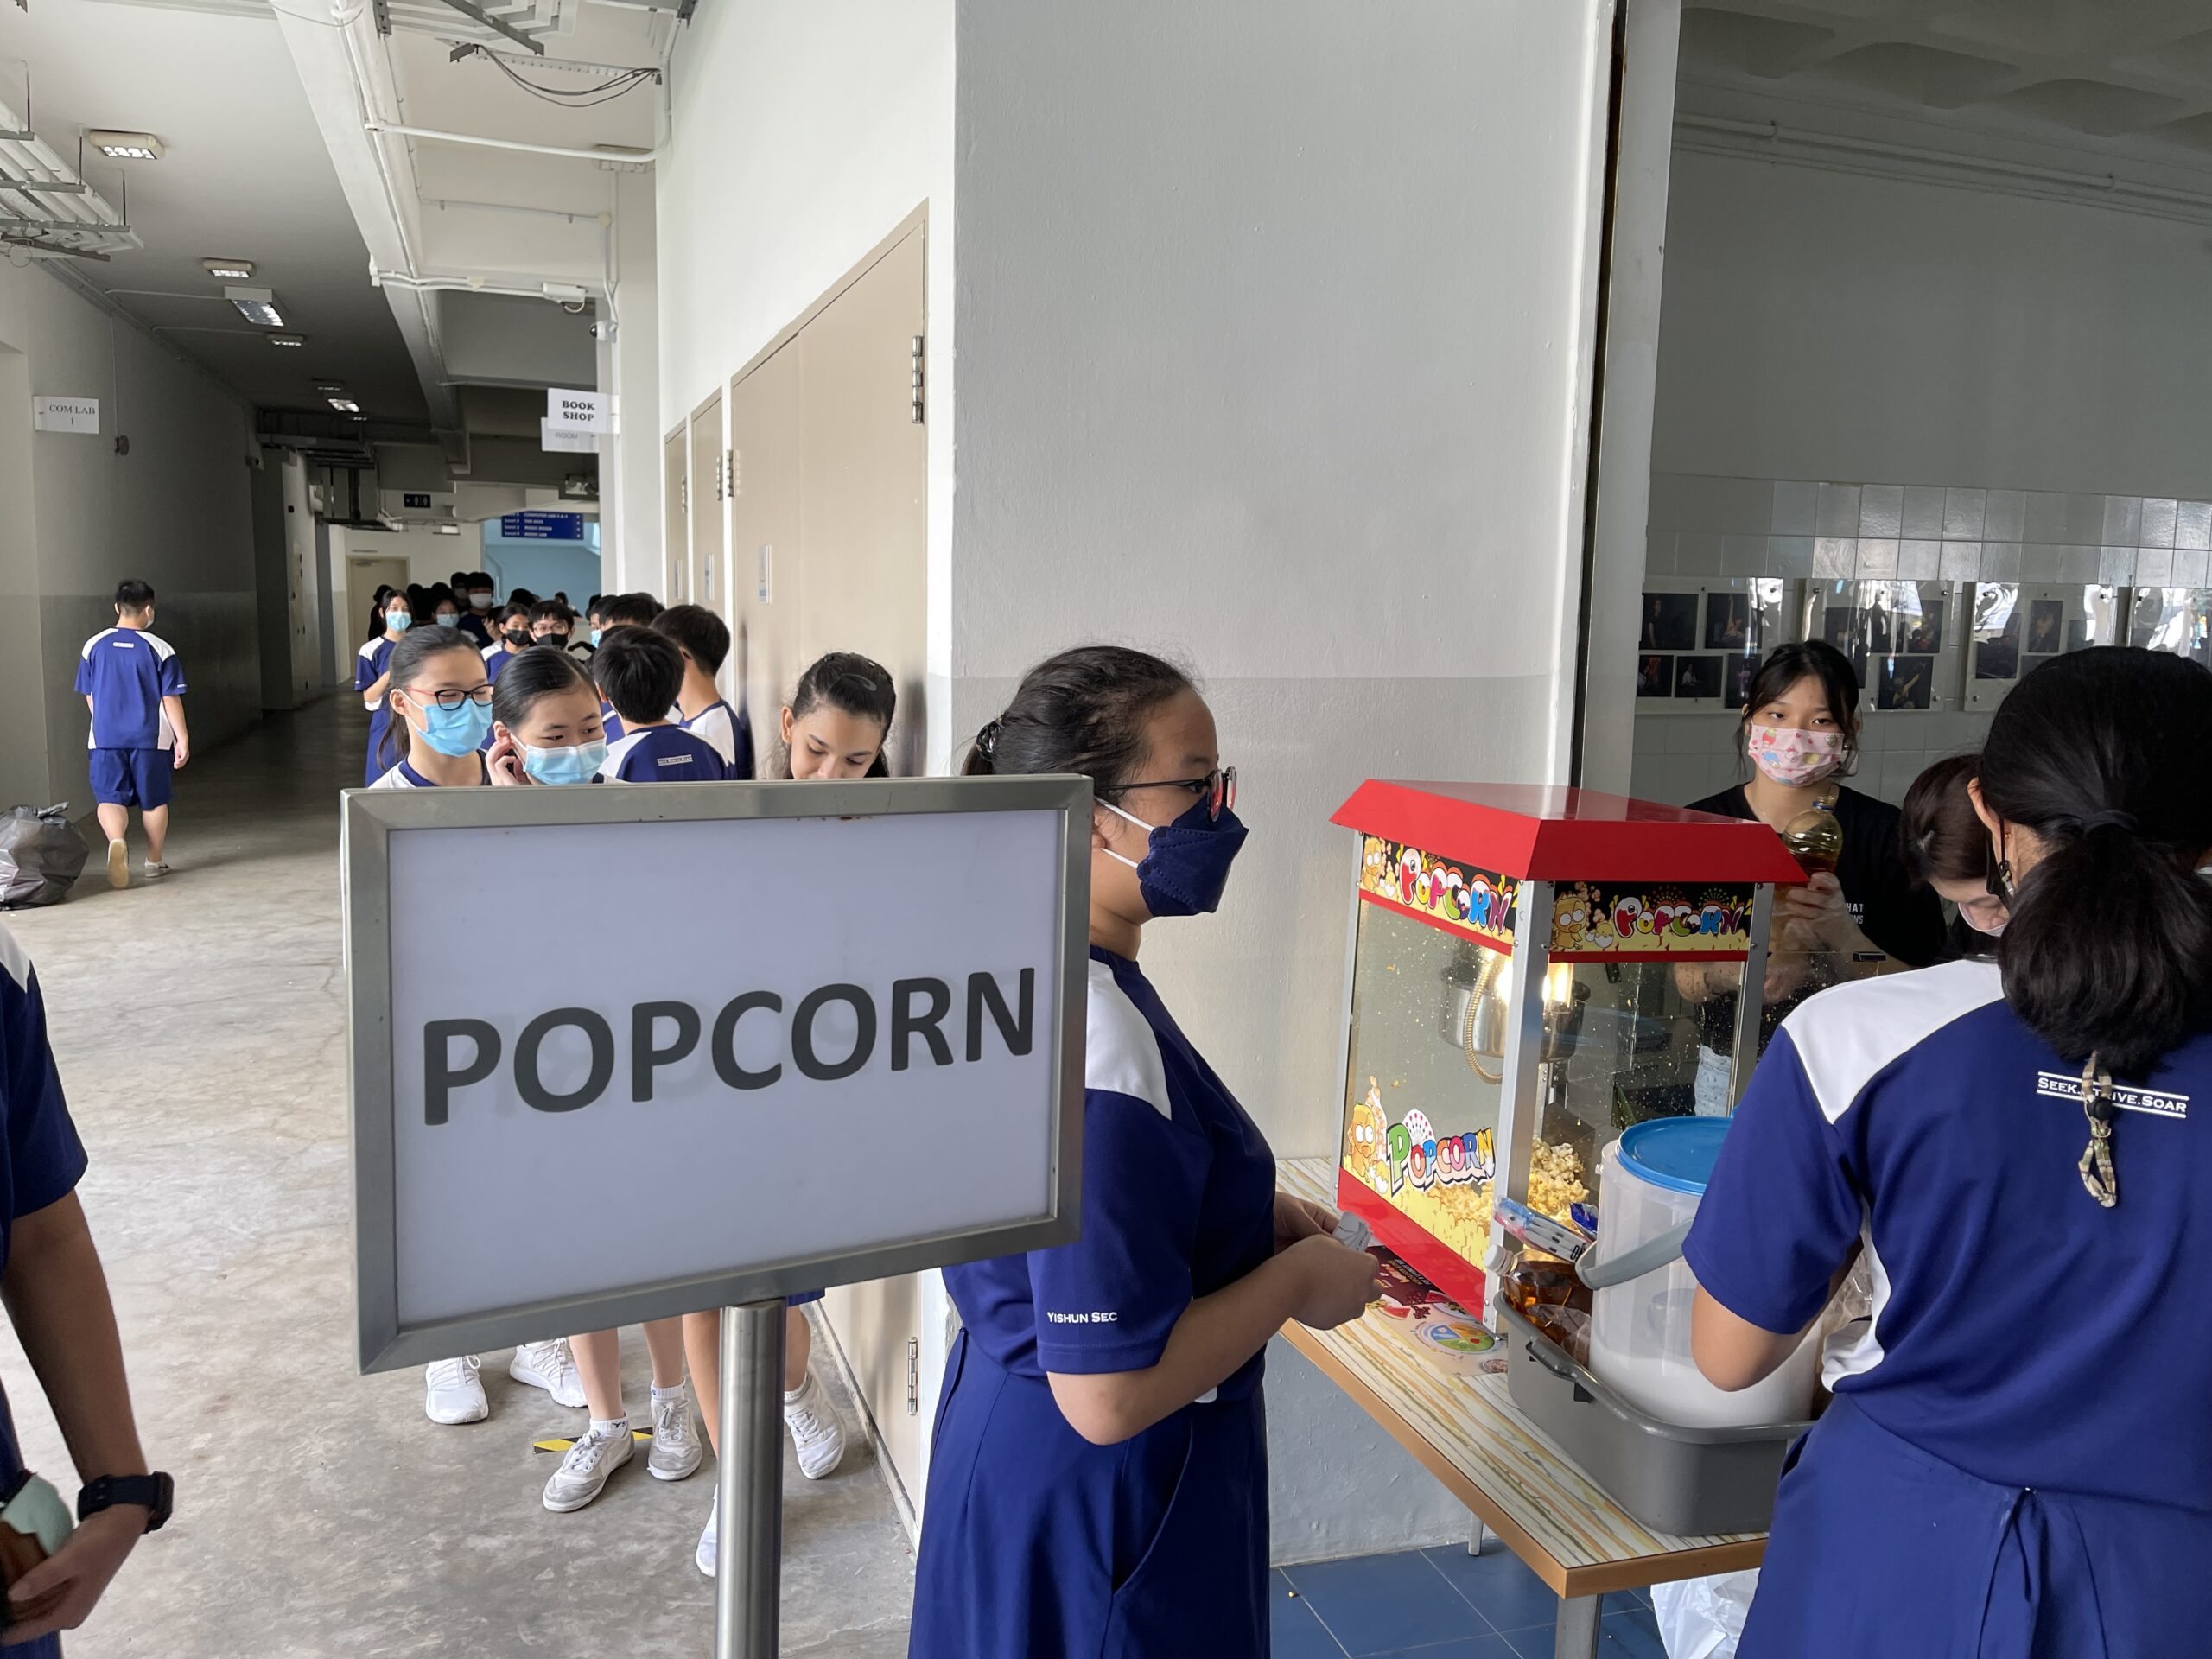 Live popcorn station Rental